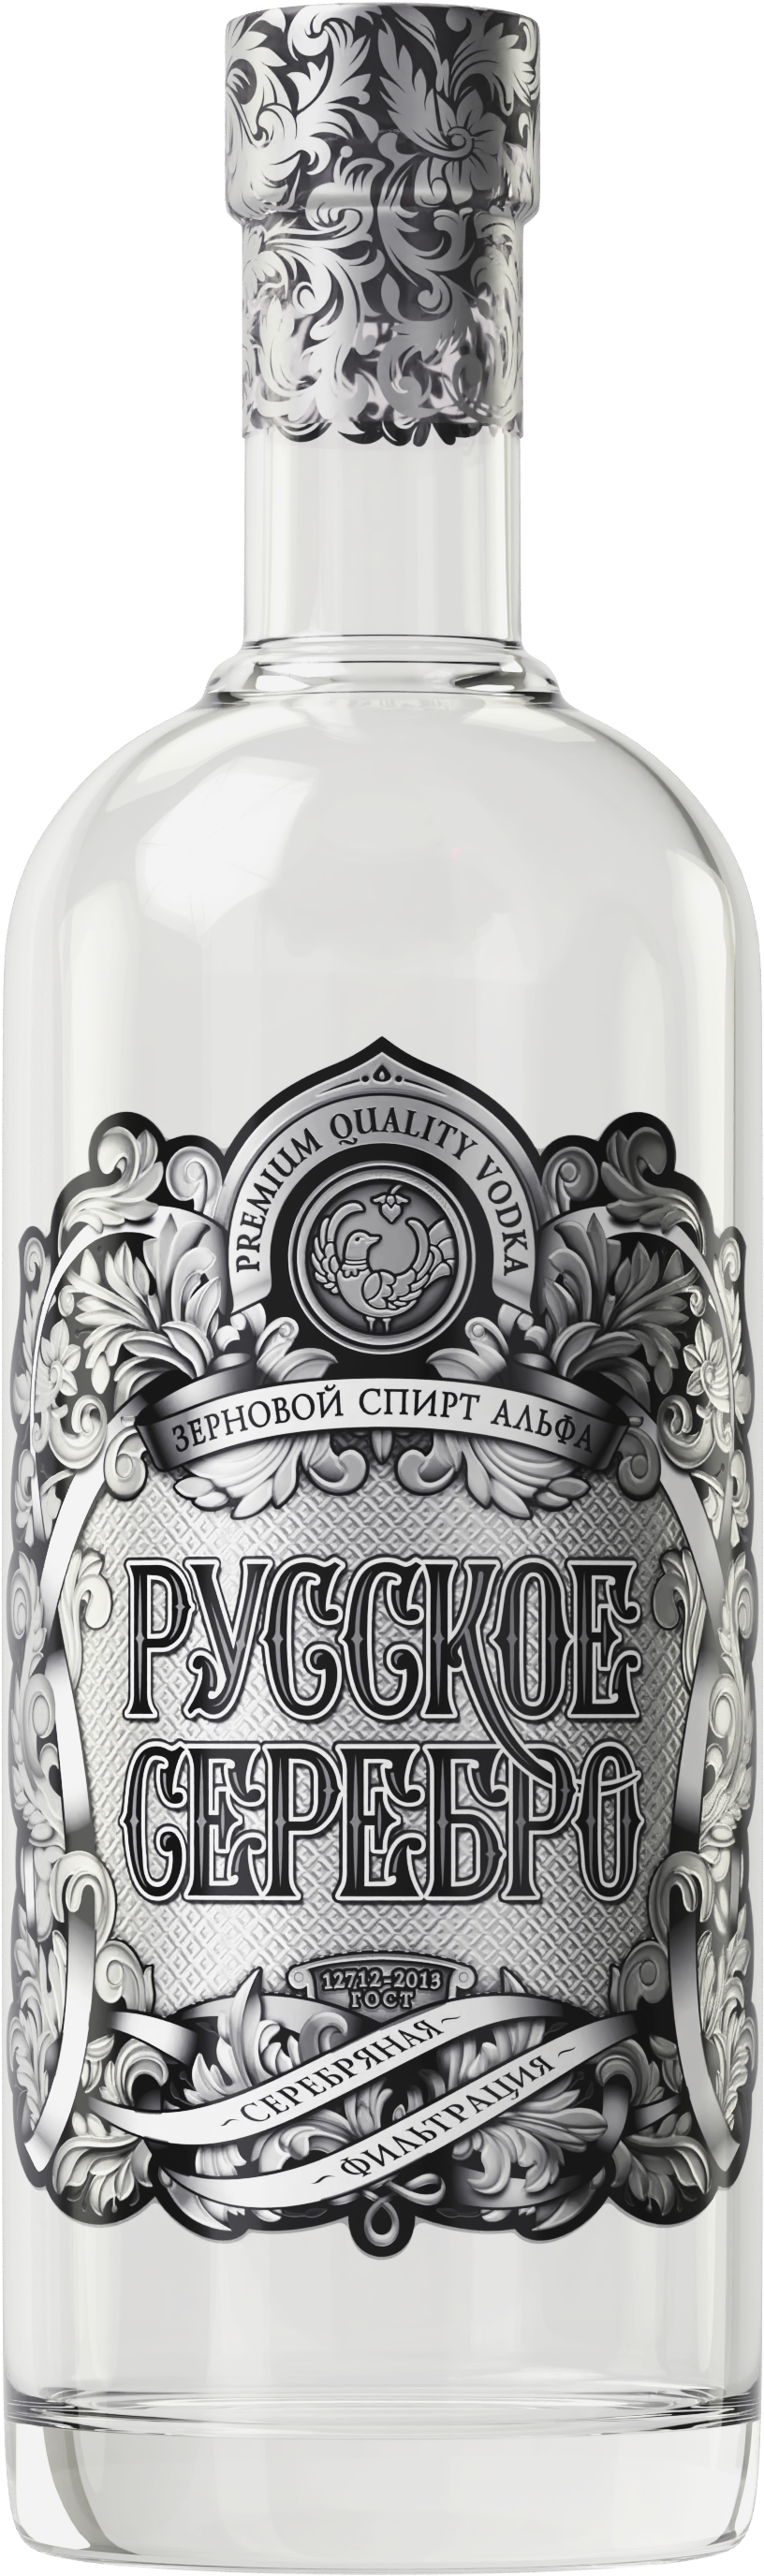 Russian Silver Vodka Bottle PNG image